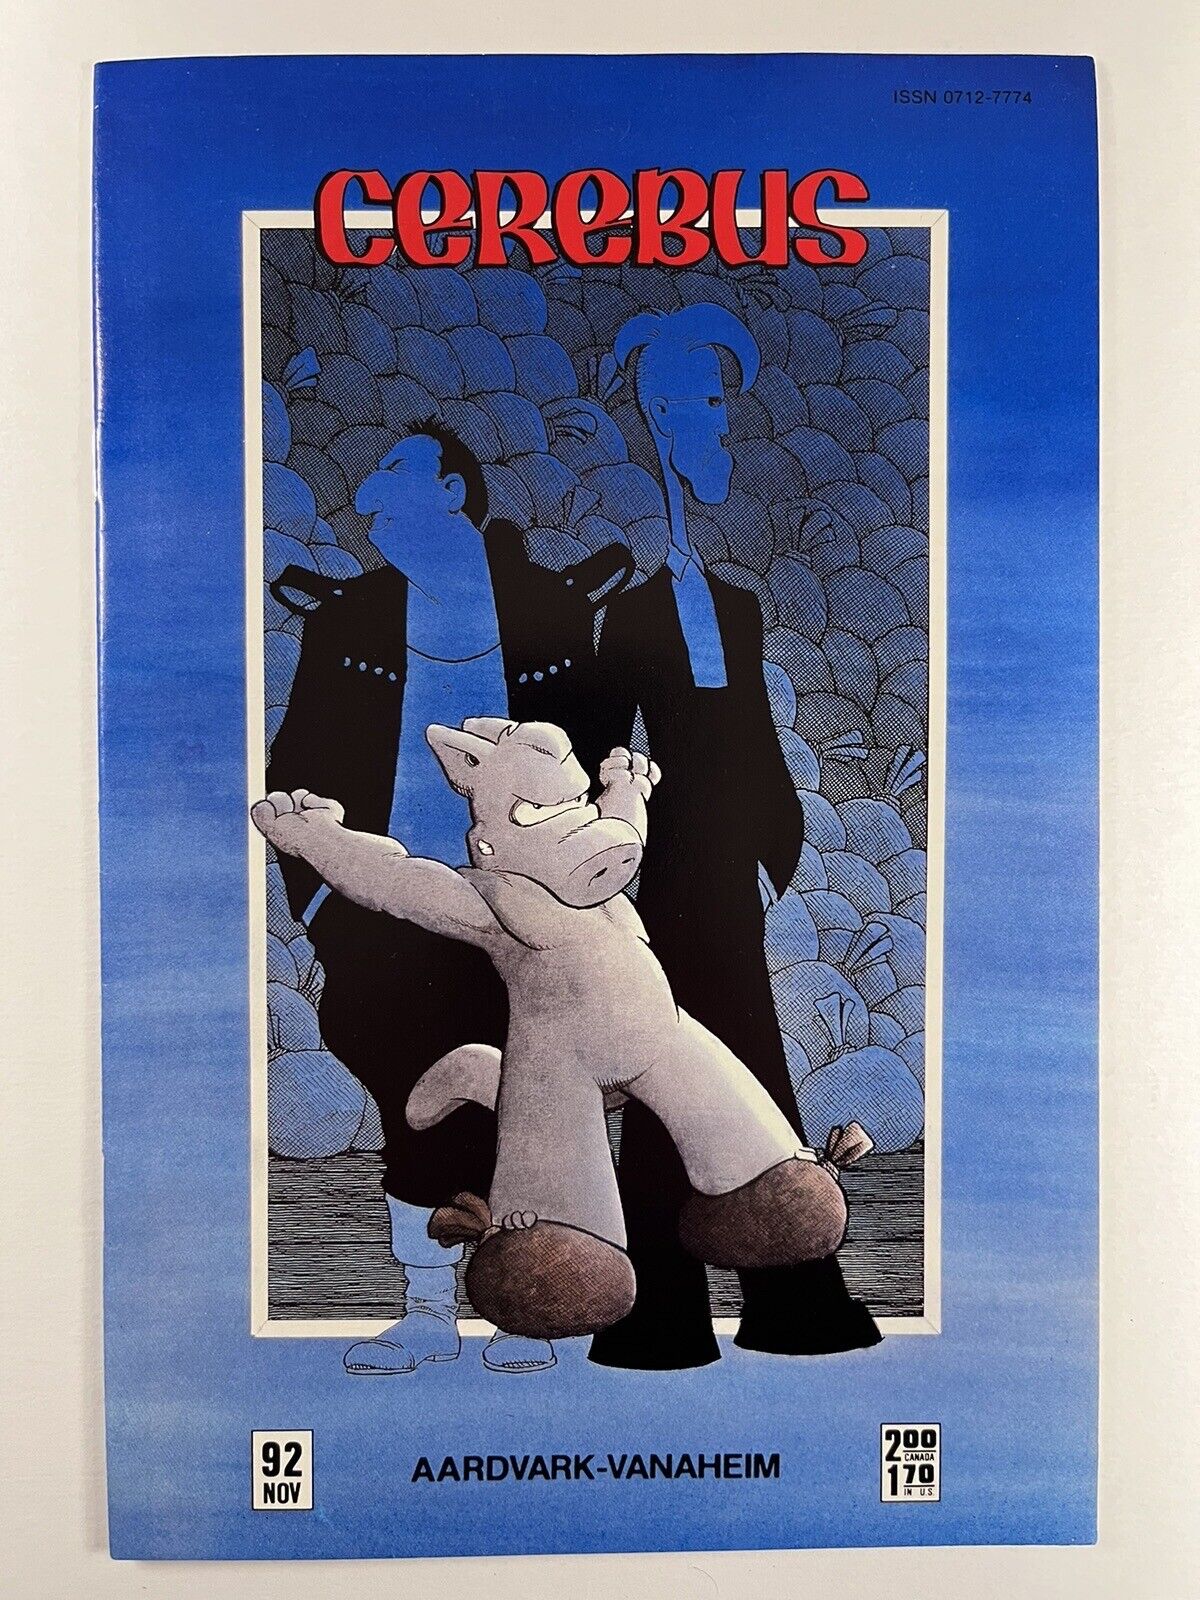 Cerebus the Aardvark #92 November 1986 ✅ Aardvark-Vanaheim ✅ Dave Sim ✅ Comics